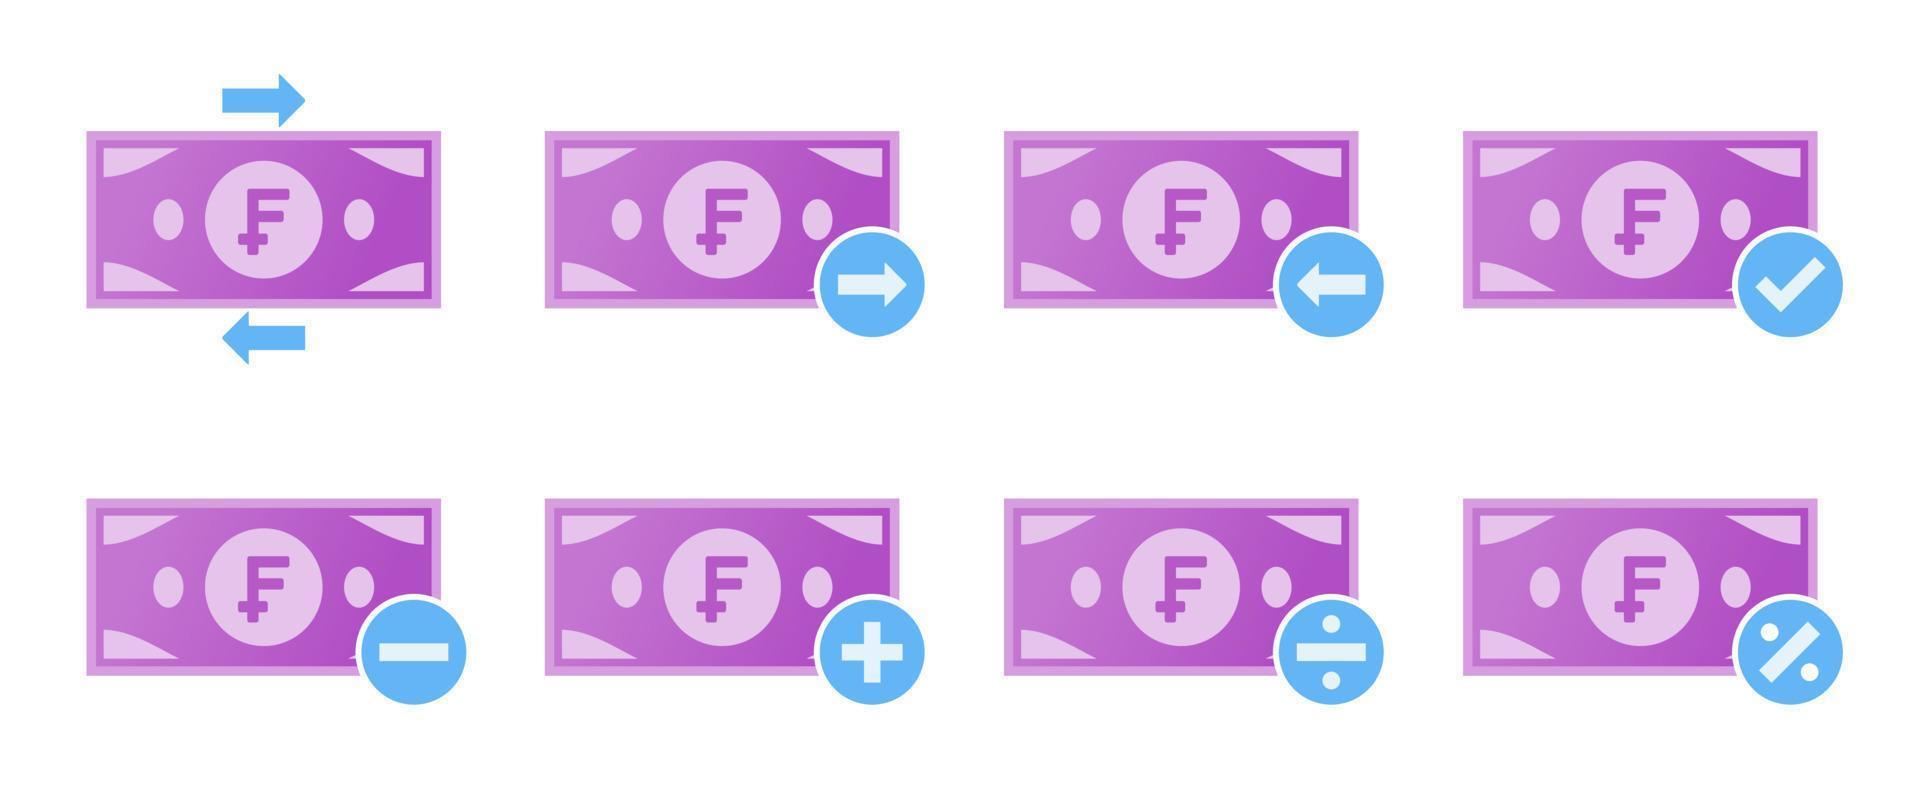 Swiss Franc Money Transaction Icon Set vector